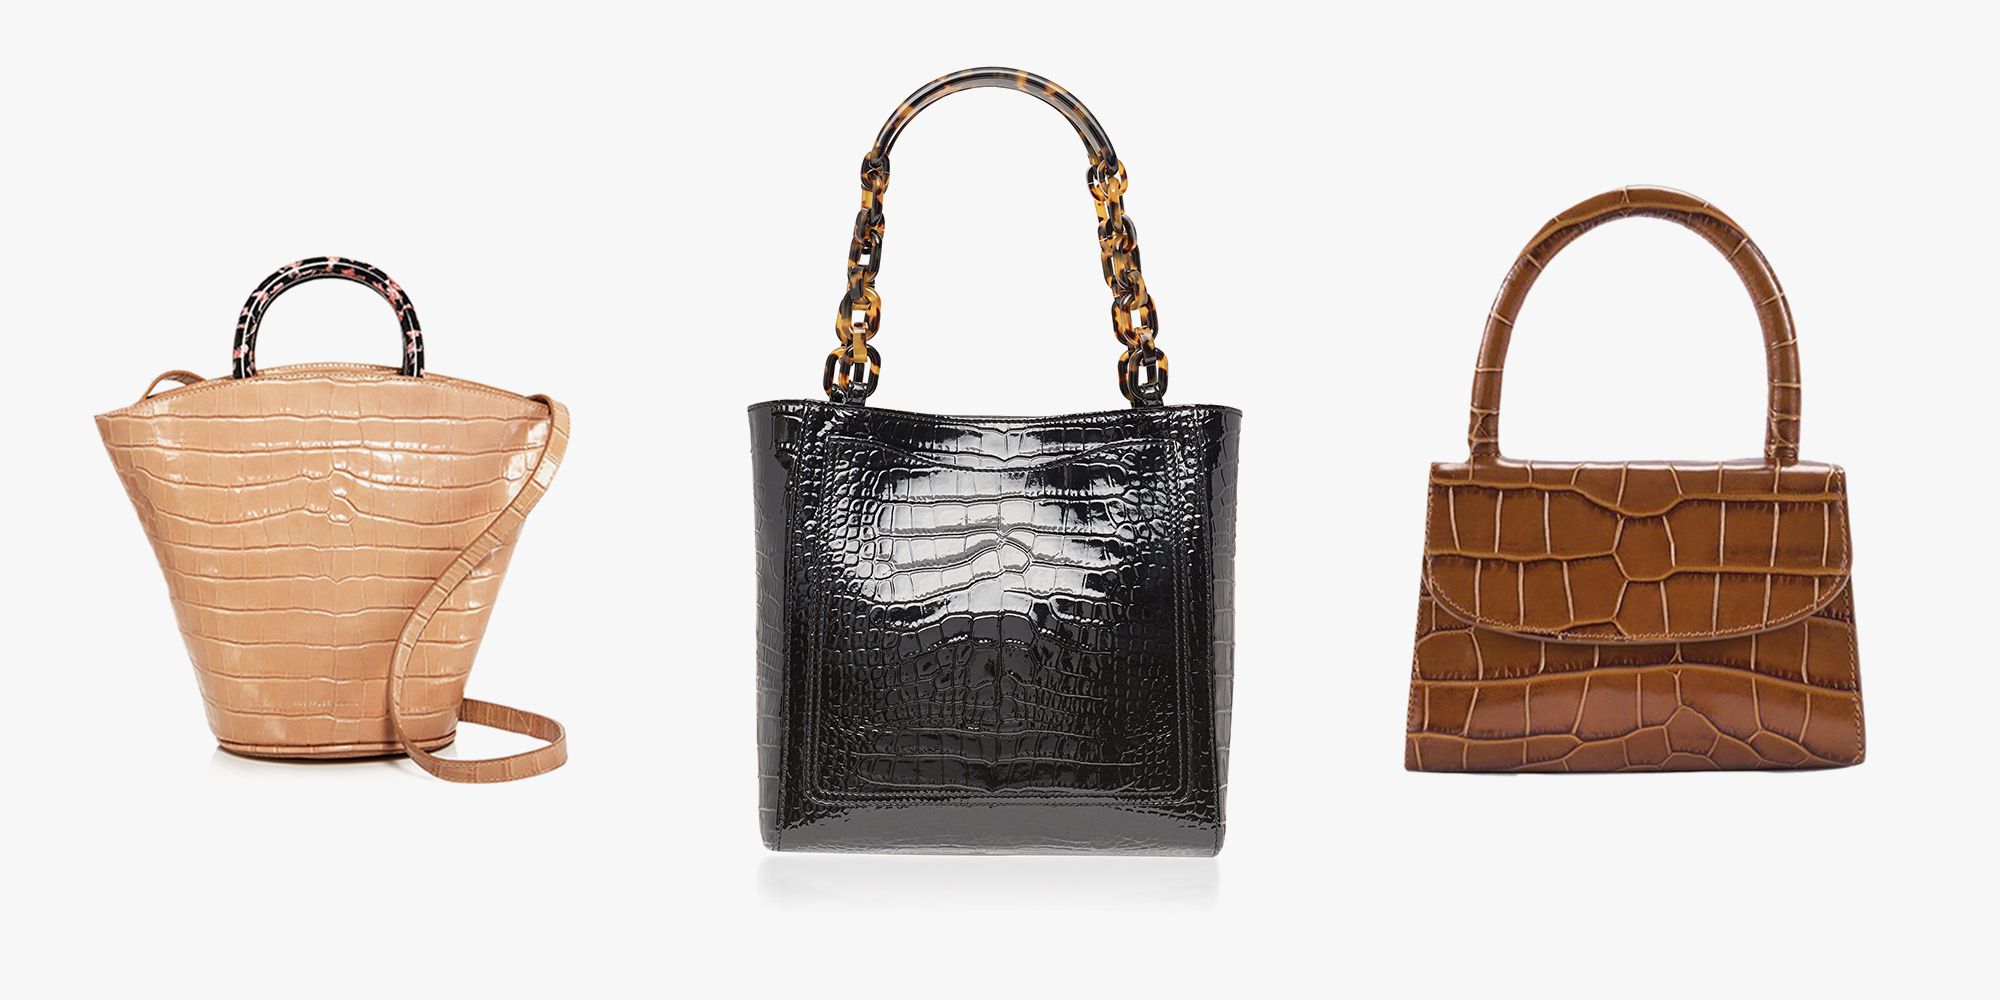 Luxurious New Women's Crocodile Embossed Handbag Leather Fashion Bag Tote